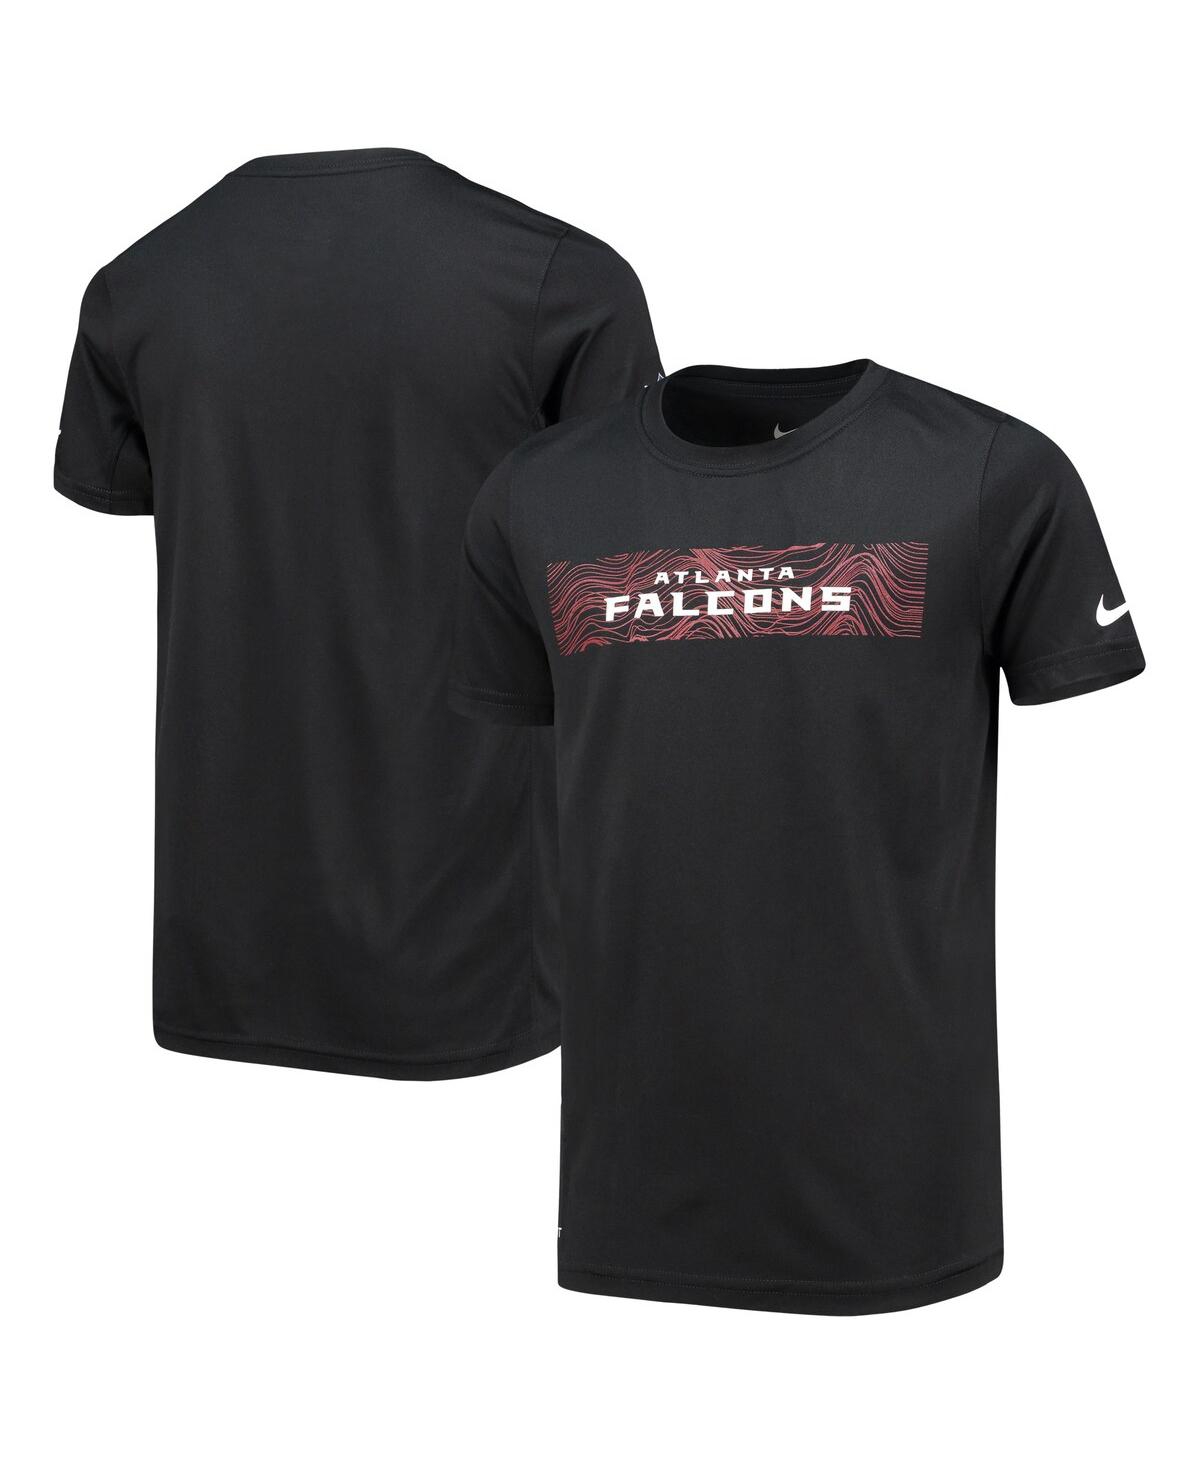 UPC 192414001114 product image for Youth Boys Nike Black Atlanta Falcons On-Field Seismic Performance T-shirt | upcitemdb.com